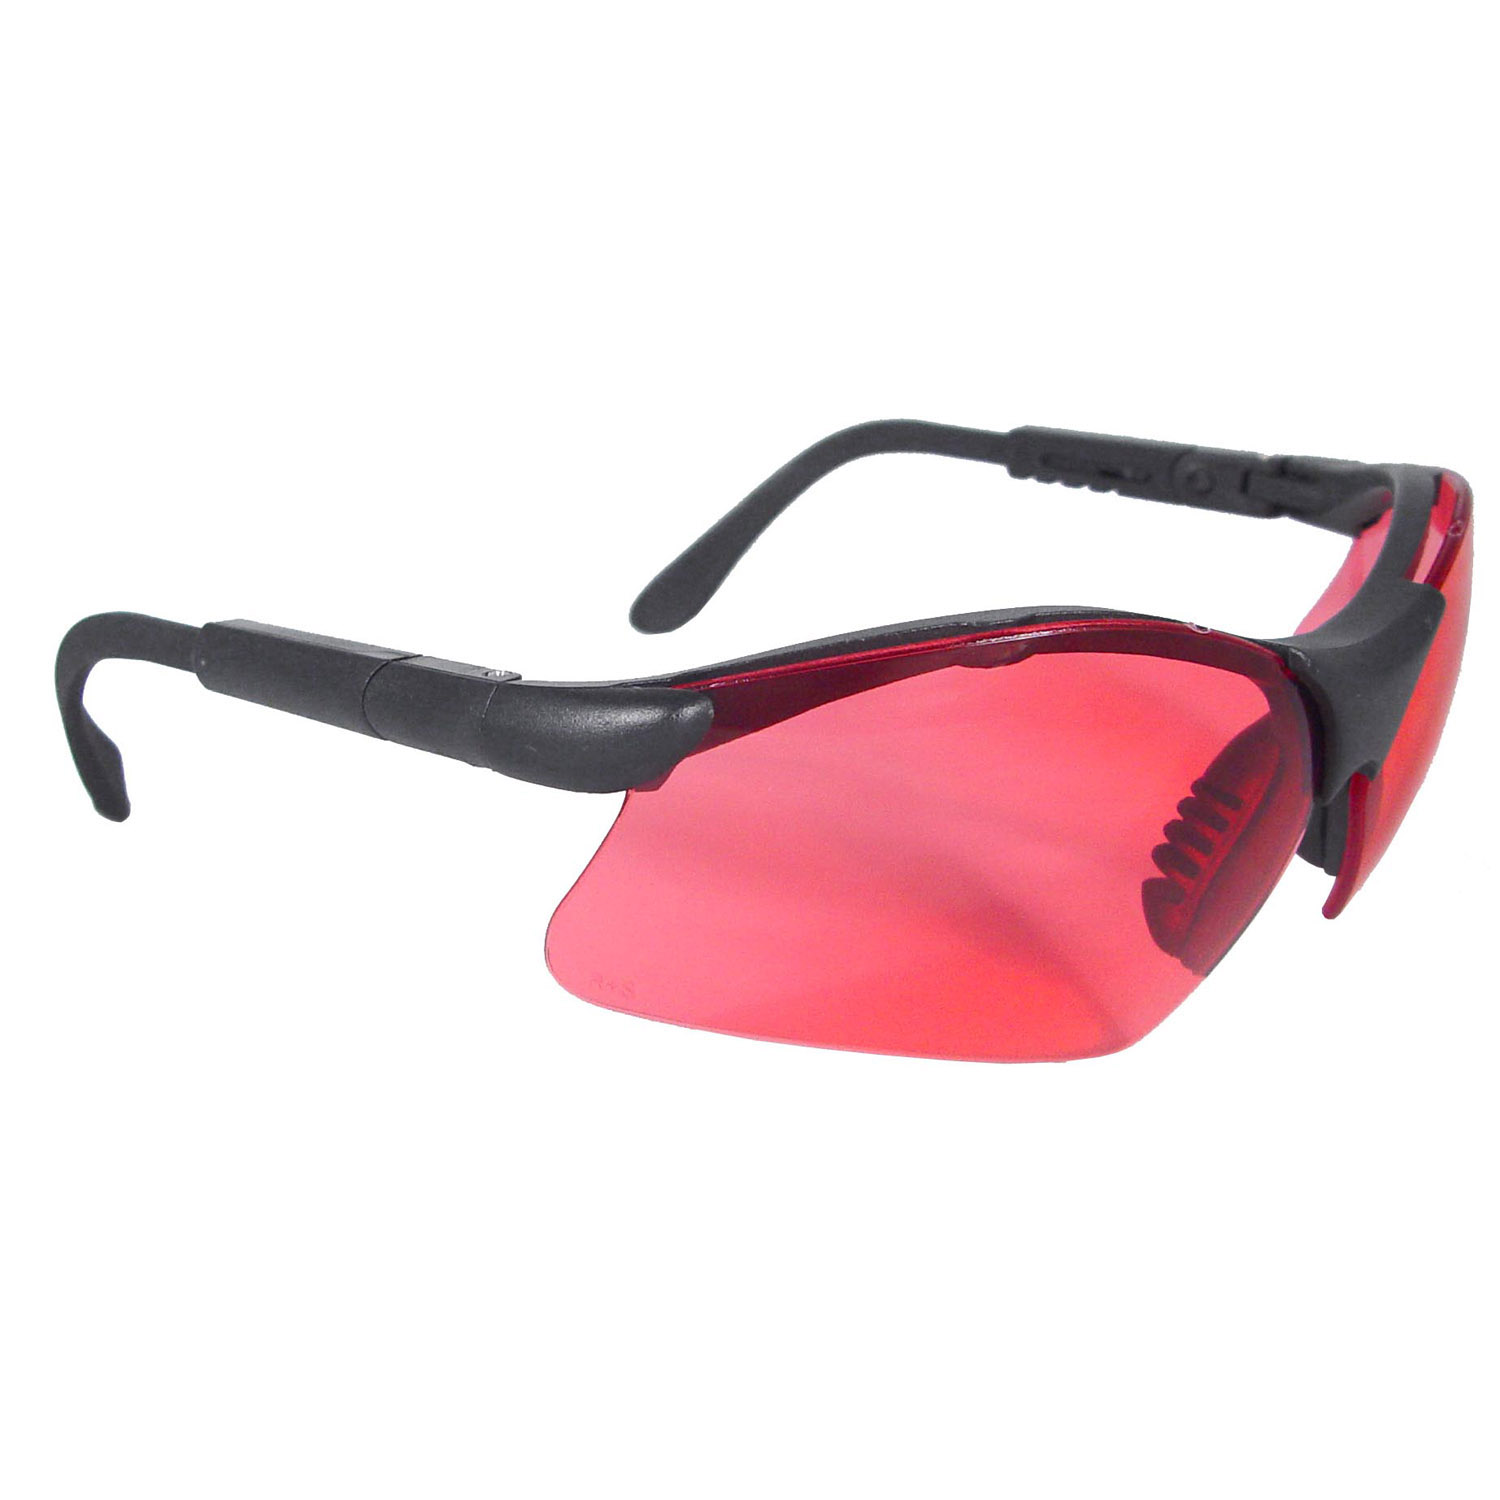 Revelation™ Safety Eyewear - Black Frame - Vermillion Lens